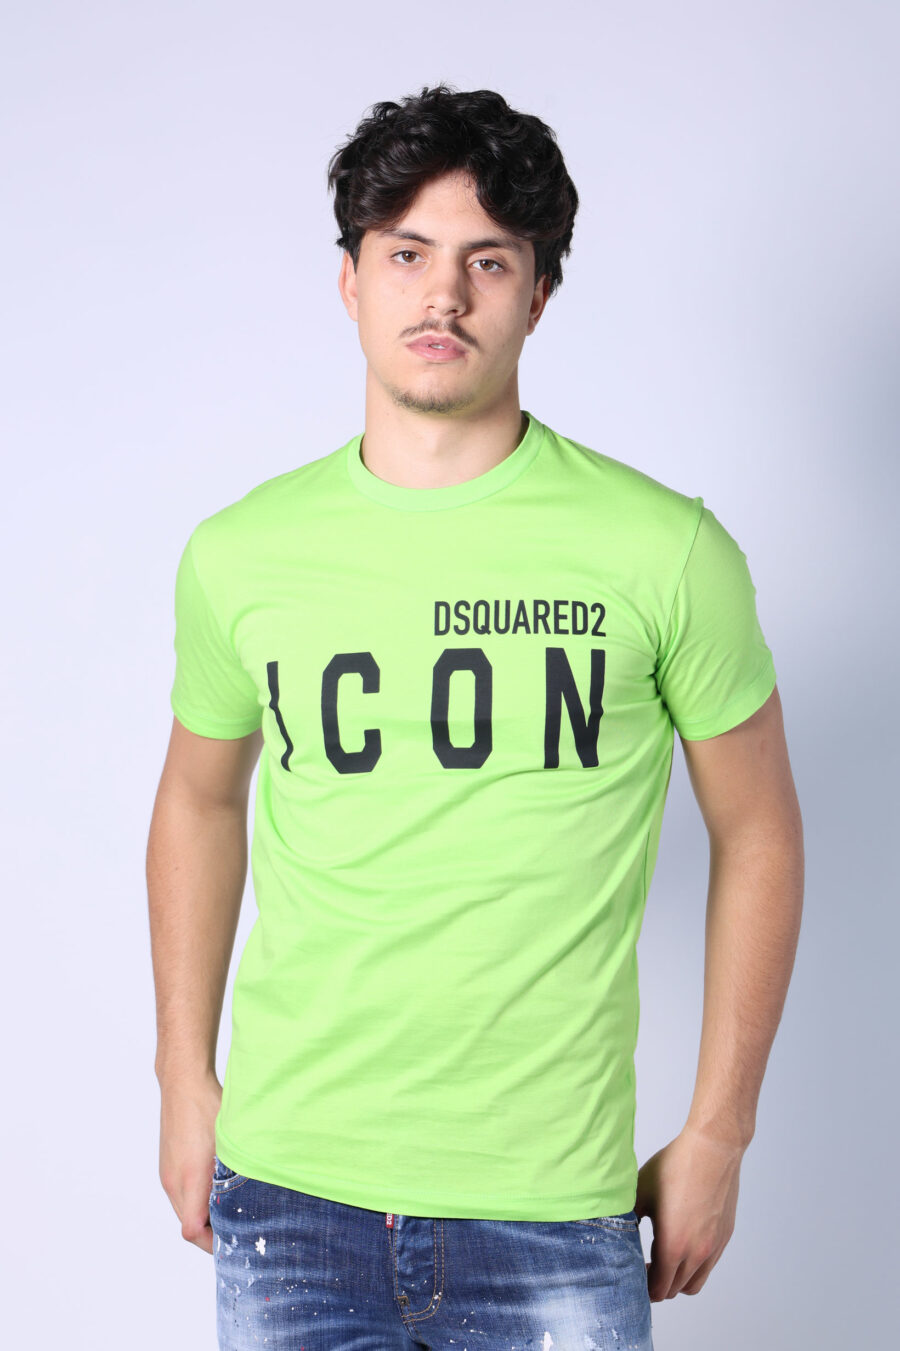 Lime grünes T-Shirt mit schwarzem "Icon" Maxilogo - Untitled Catalog 05395